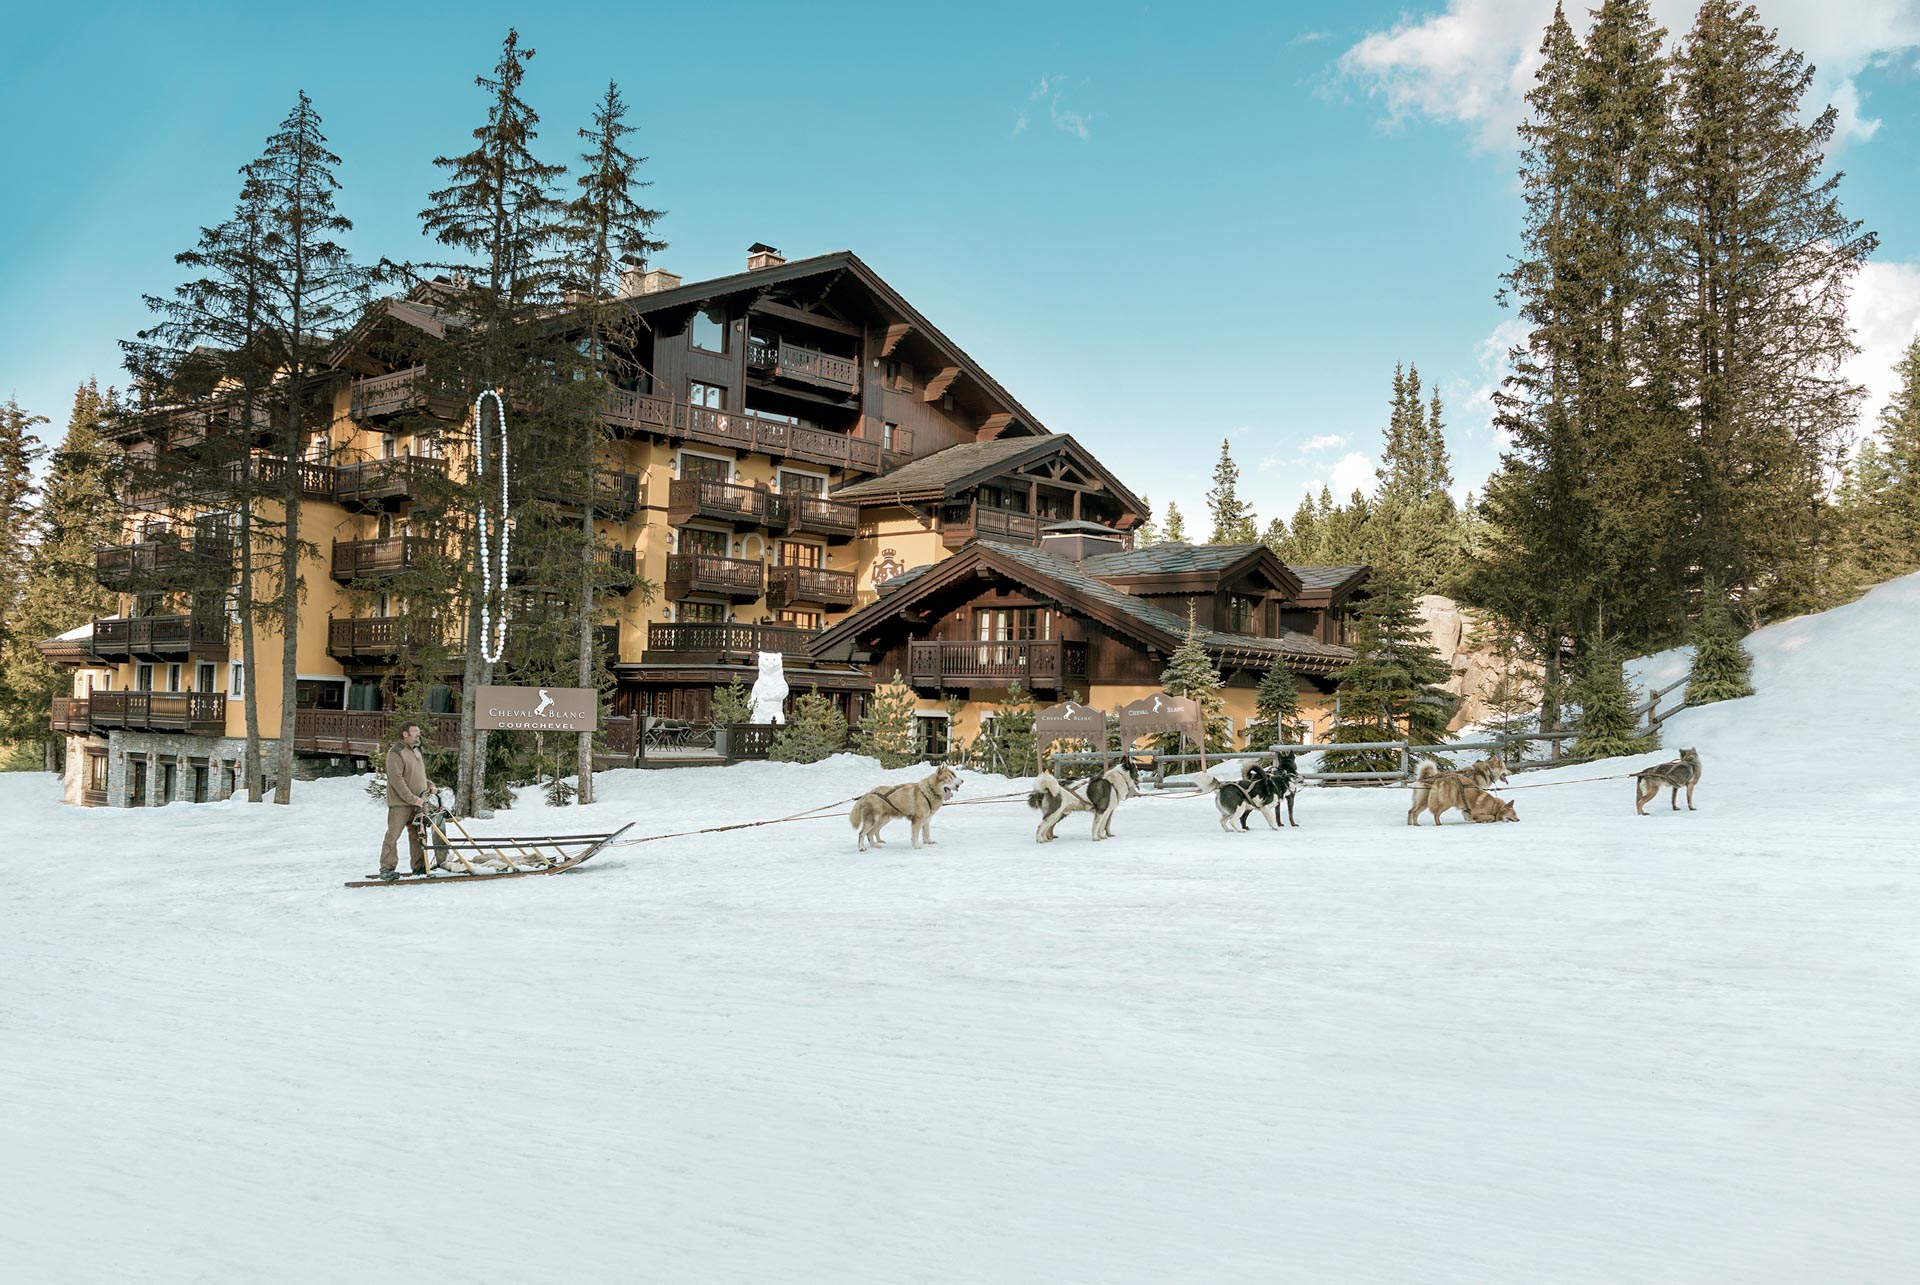 The Cheval Blanc Hotel, Courchevel Ski … – License image – 70330368 ❘  lookphotos